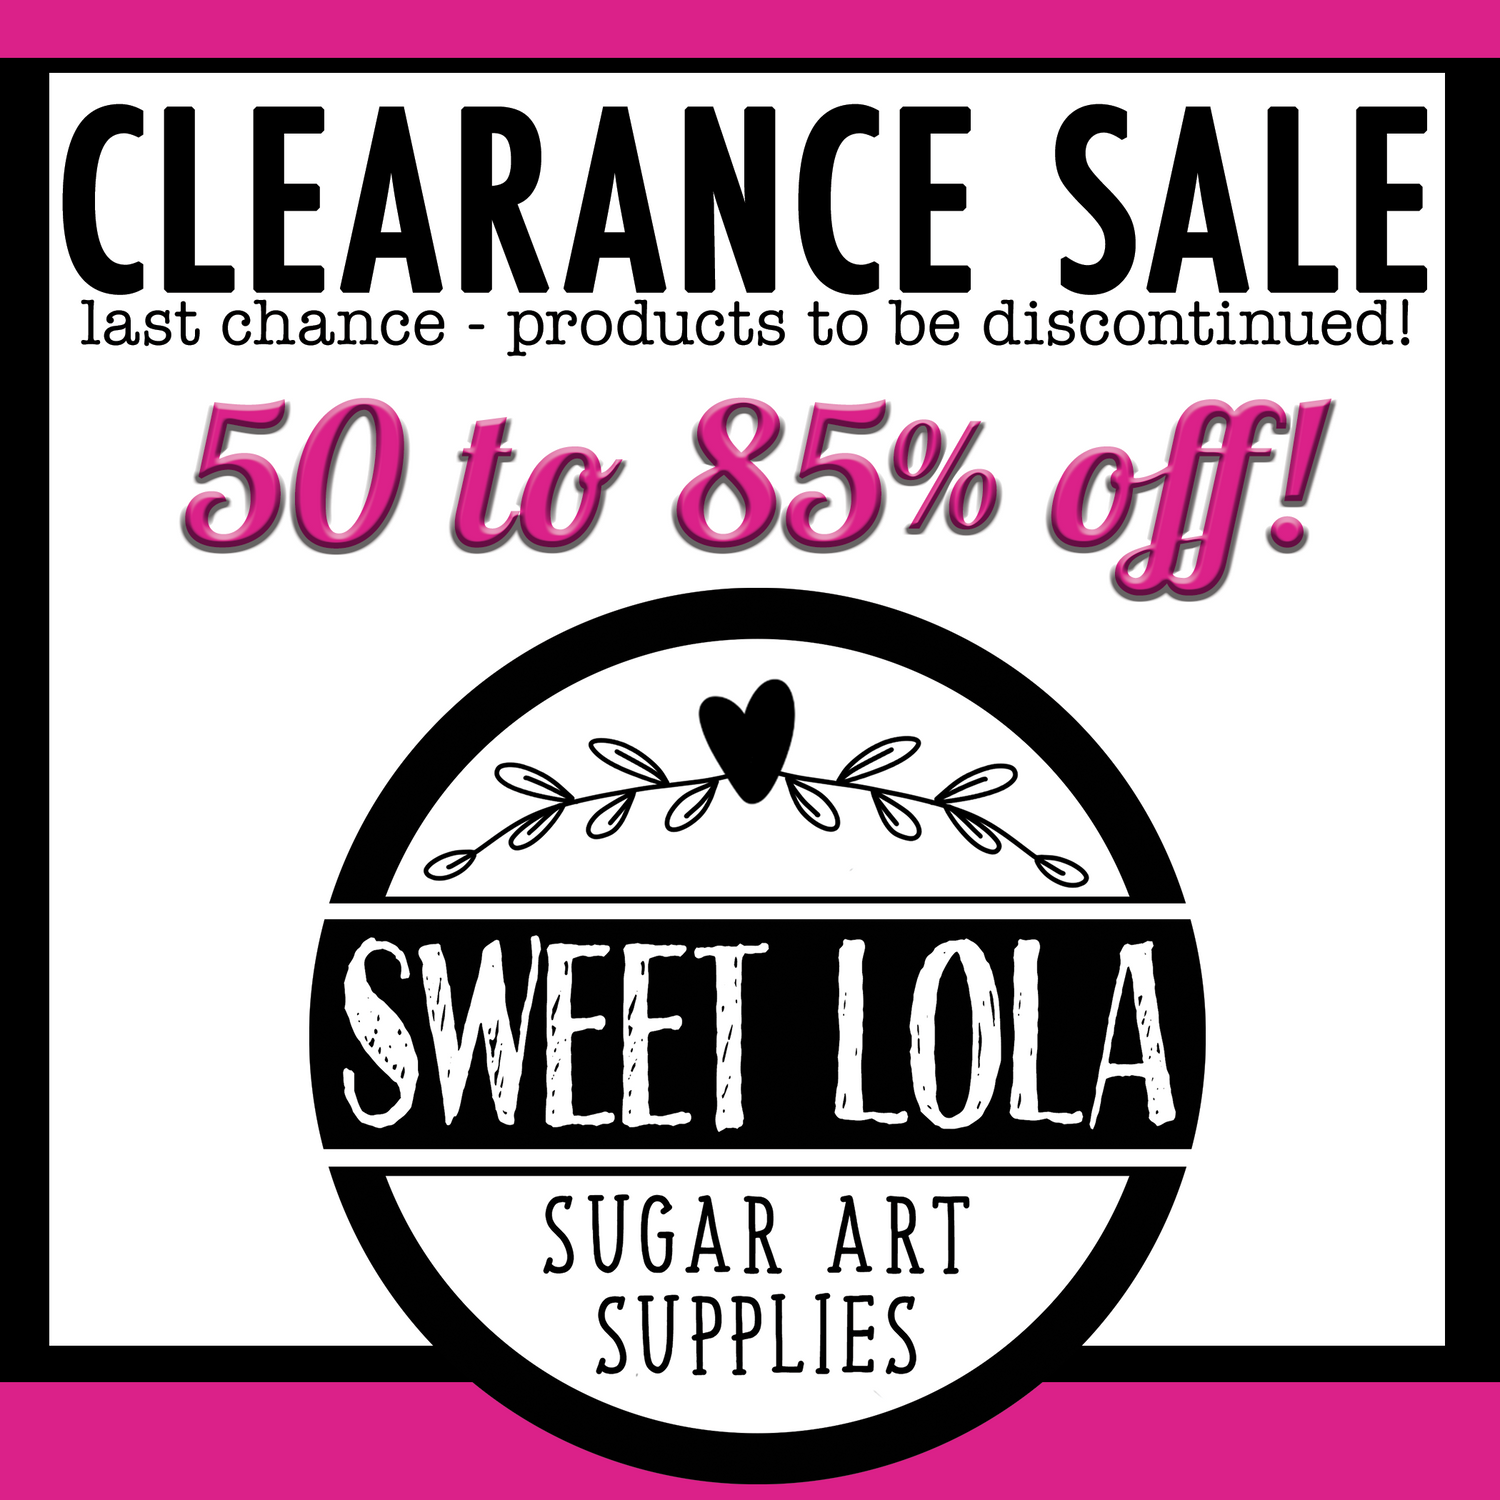 Flexabets™ Bundle Sets - Marvelous Molds™ – Sweet Lola Sugar Art Supplies